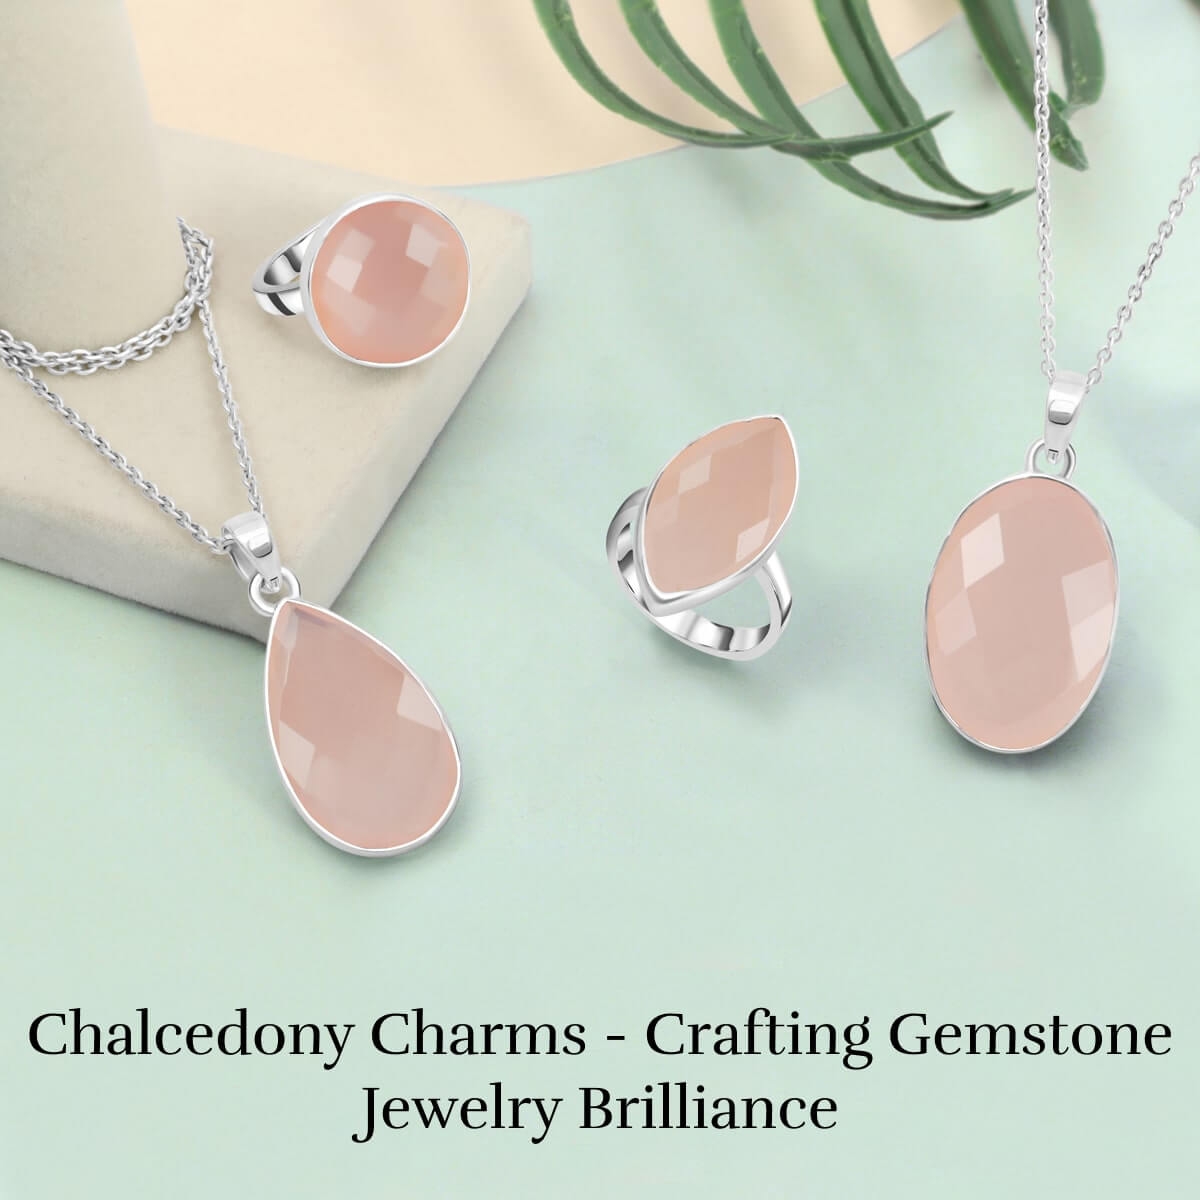 How to use Chalcedony as Gemstone Jewelry